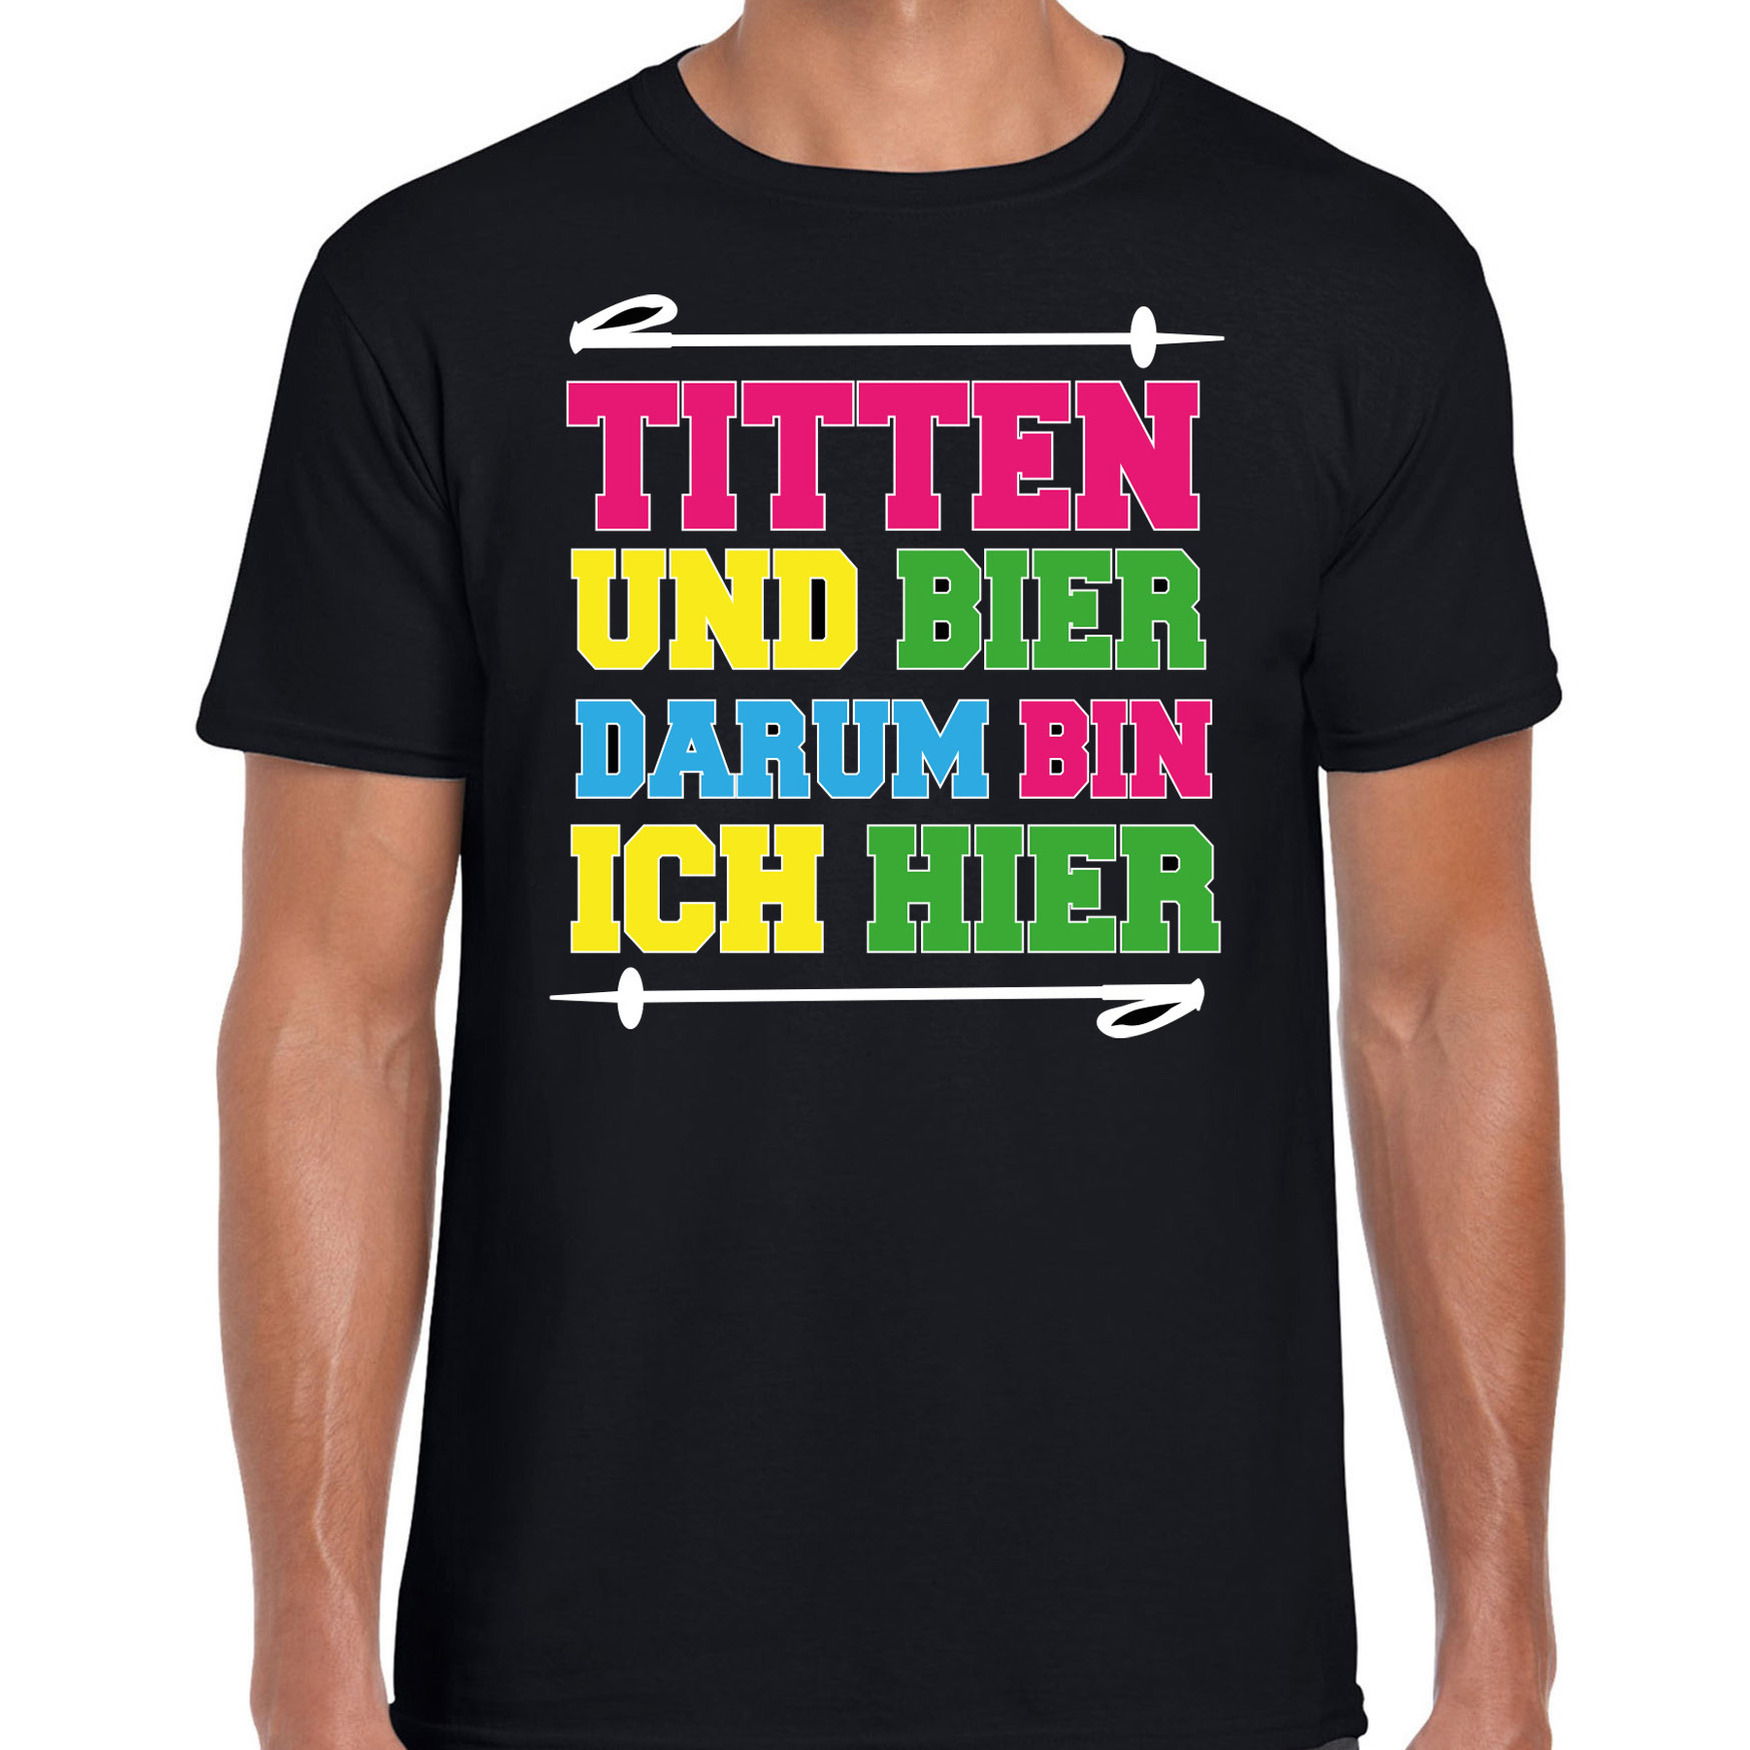 Apres ski t-shirt voor heren titten und bier zwart apres ski-winter outfit